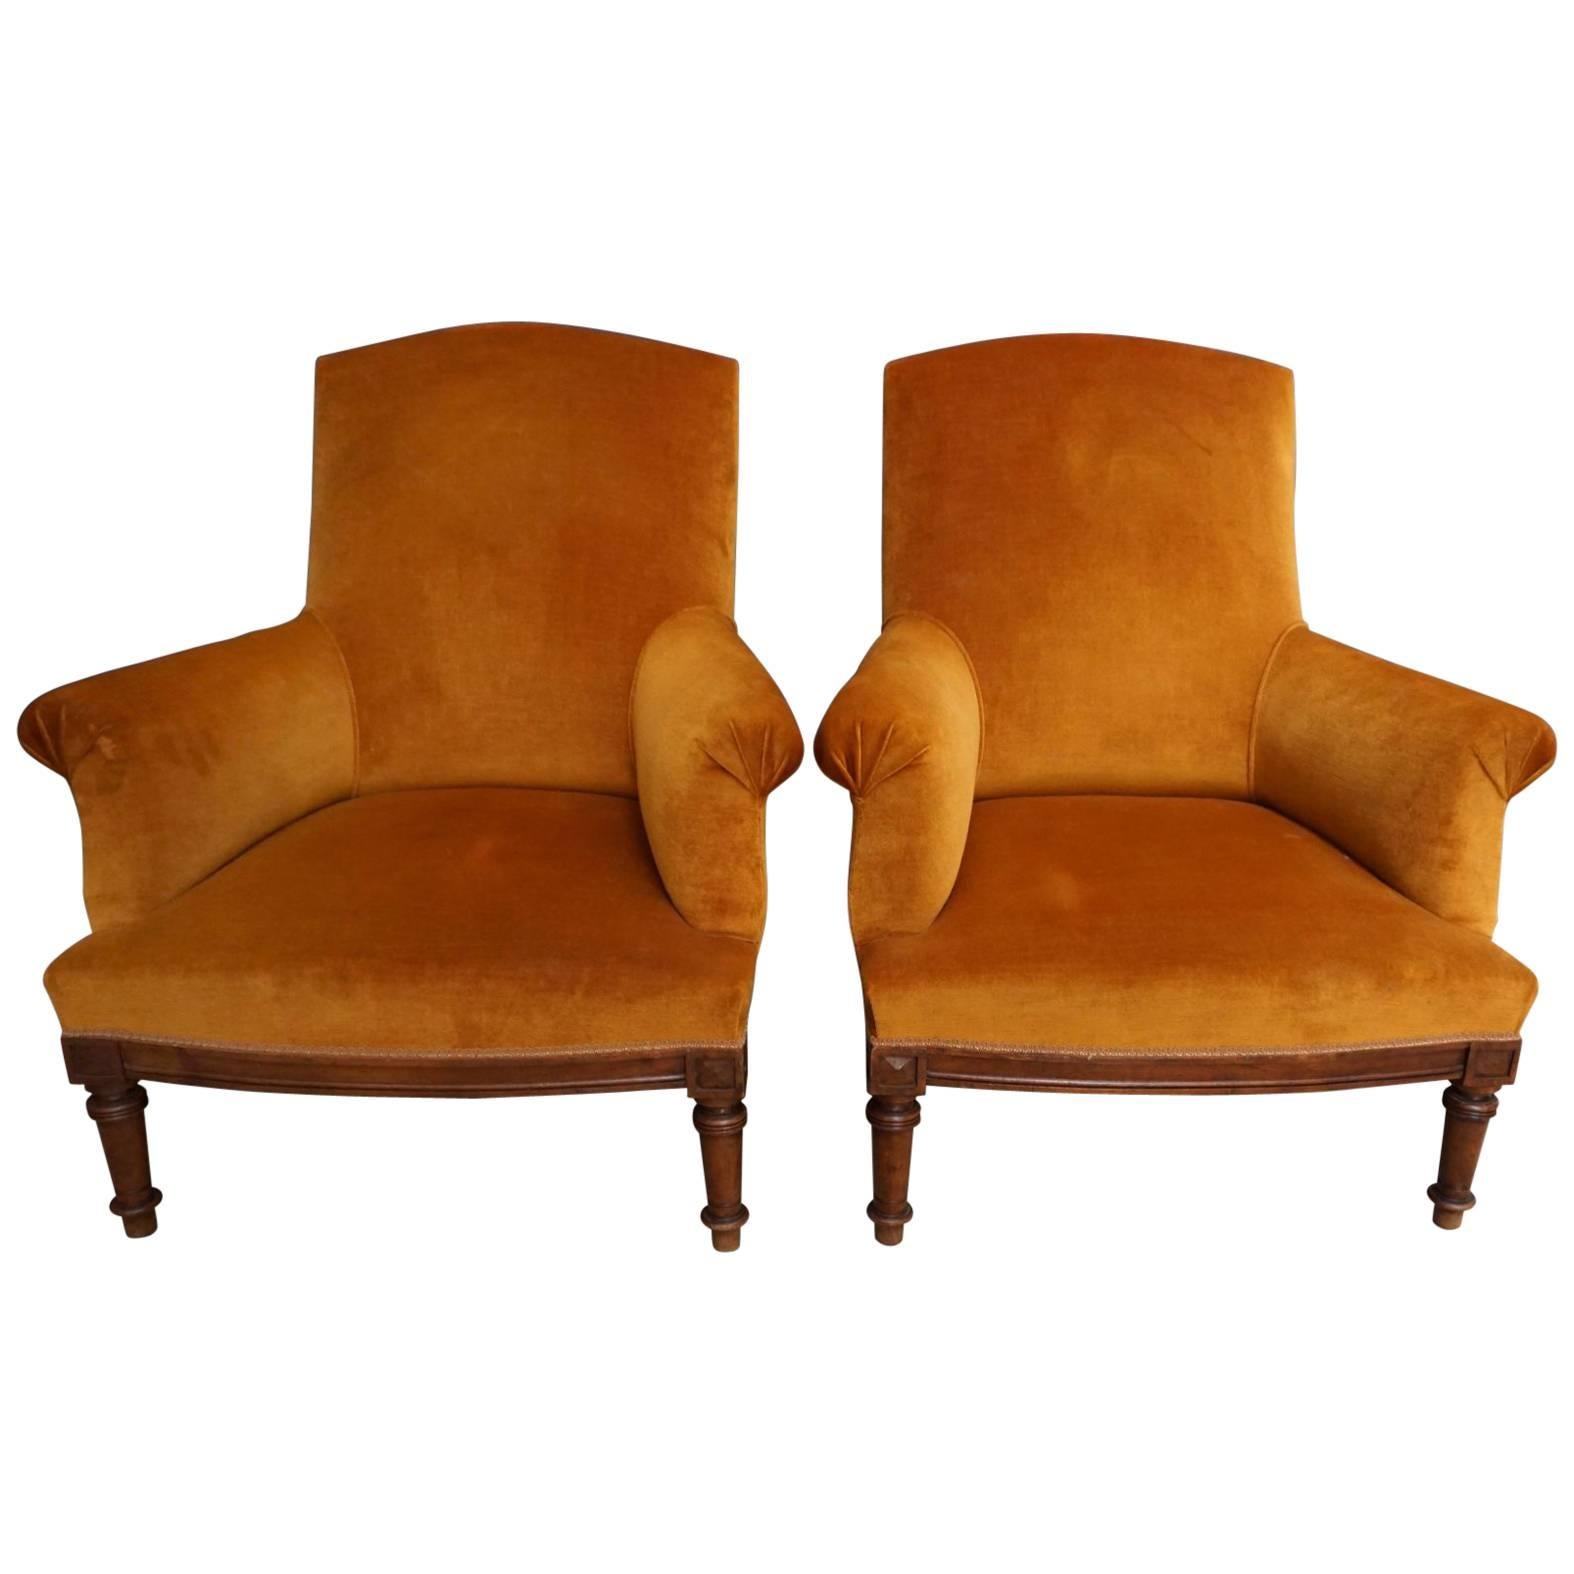 Pair of Orange Velvet French Lounge Chairs Walnut Frame, 1920-1930s